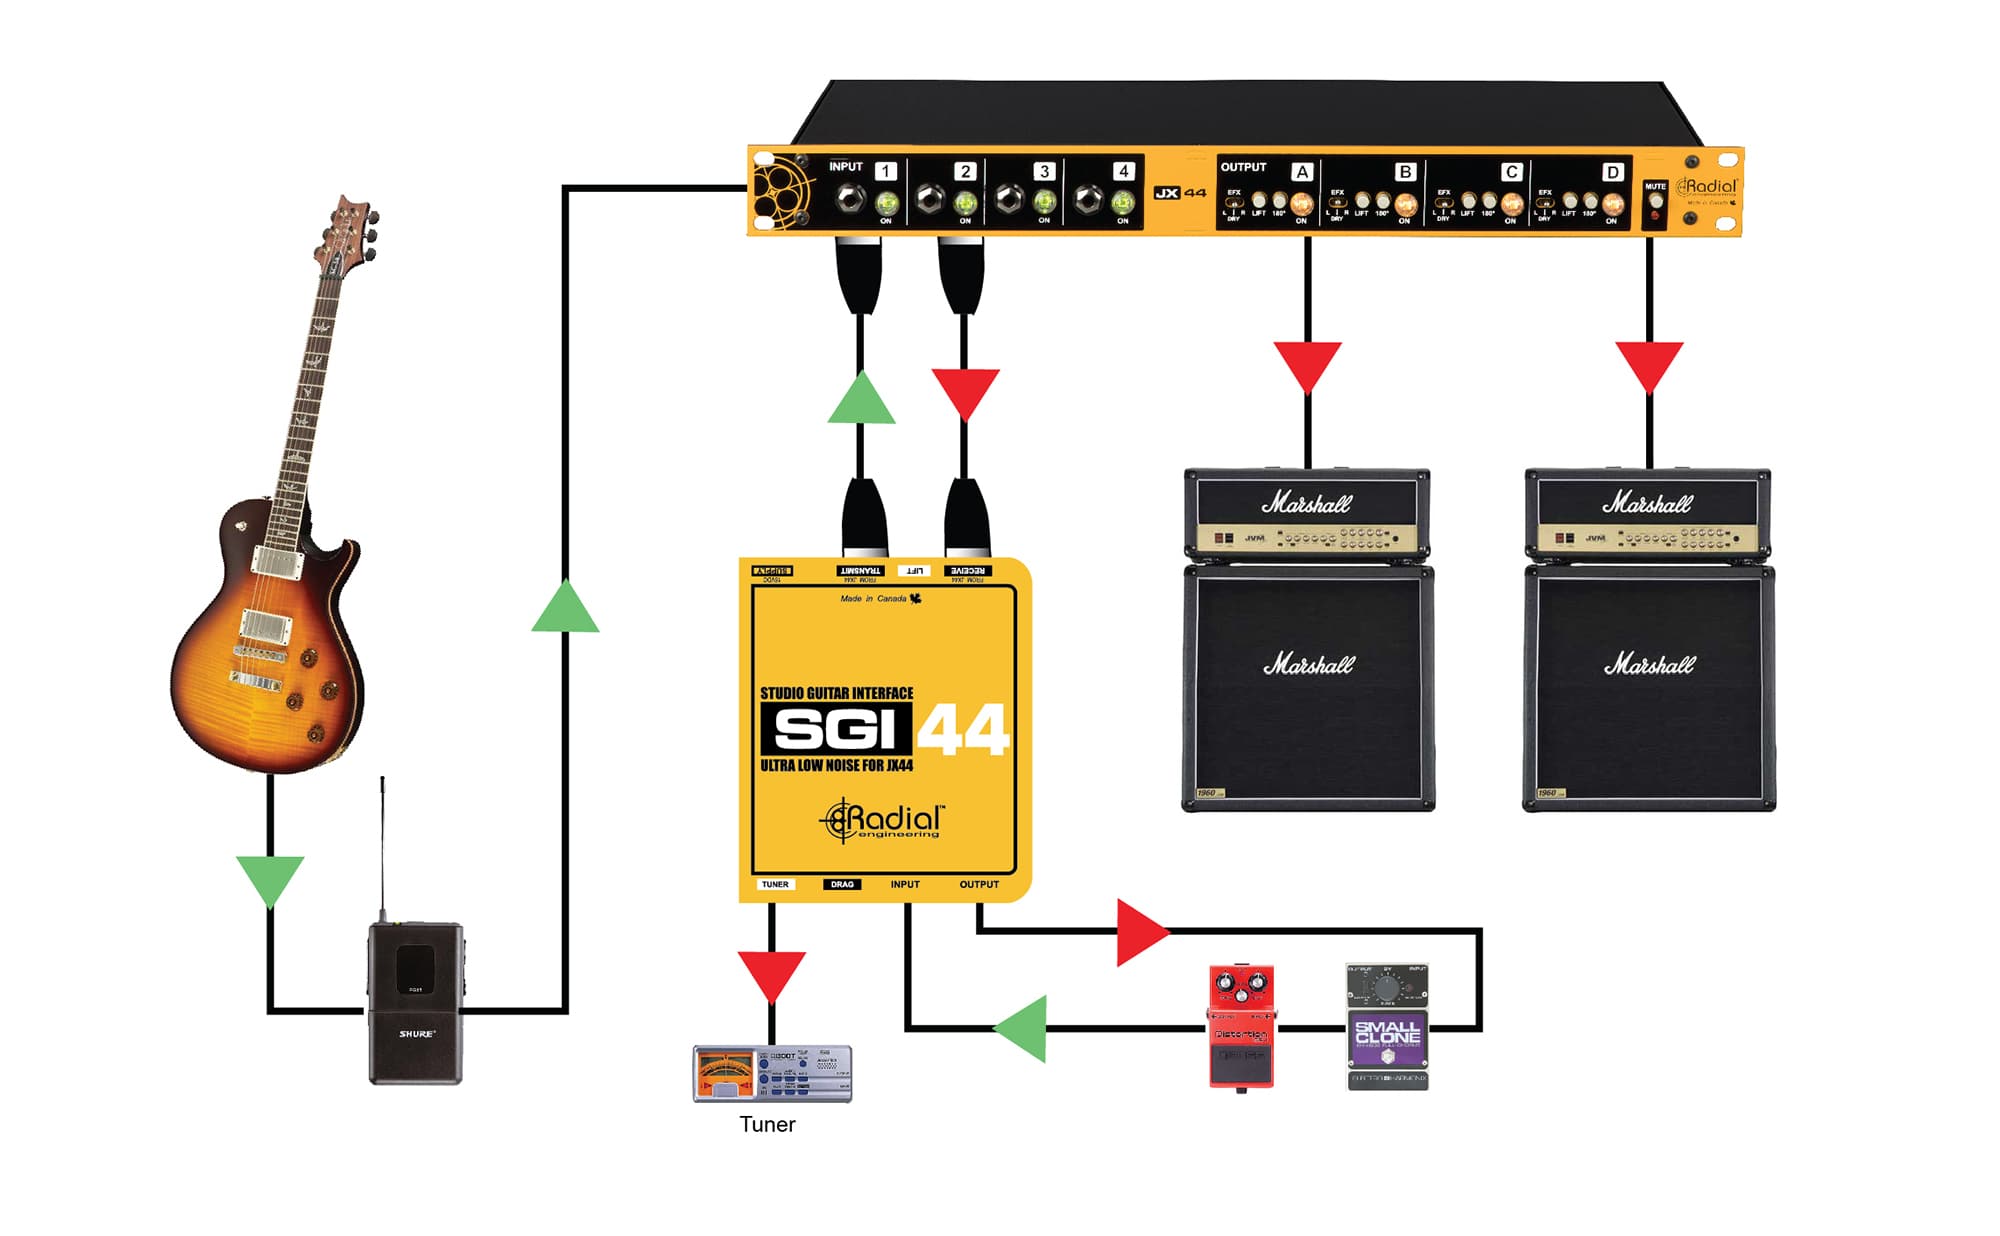 SGI-44 Applications - Using the SGI 44 with the Radial JX44